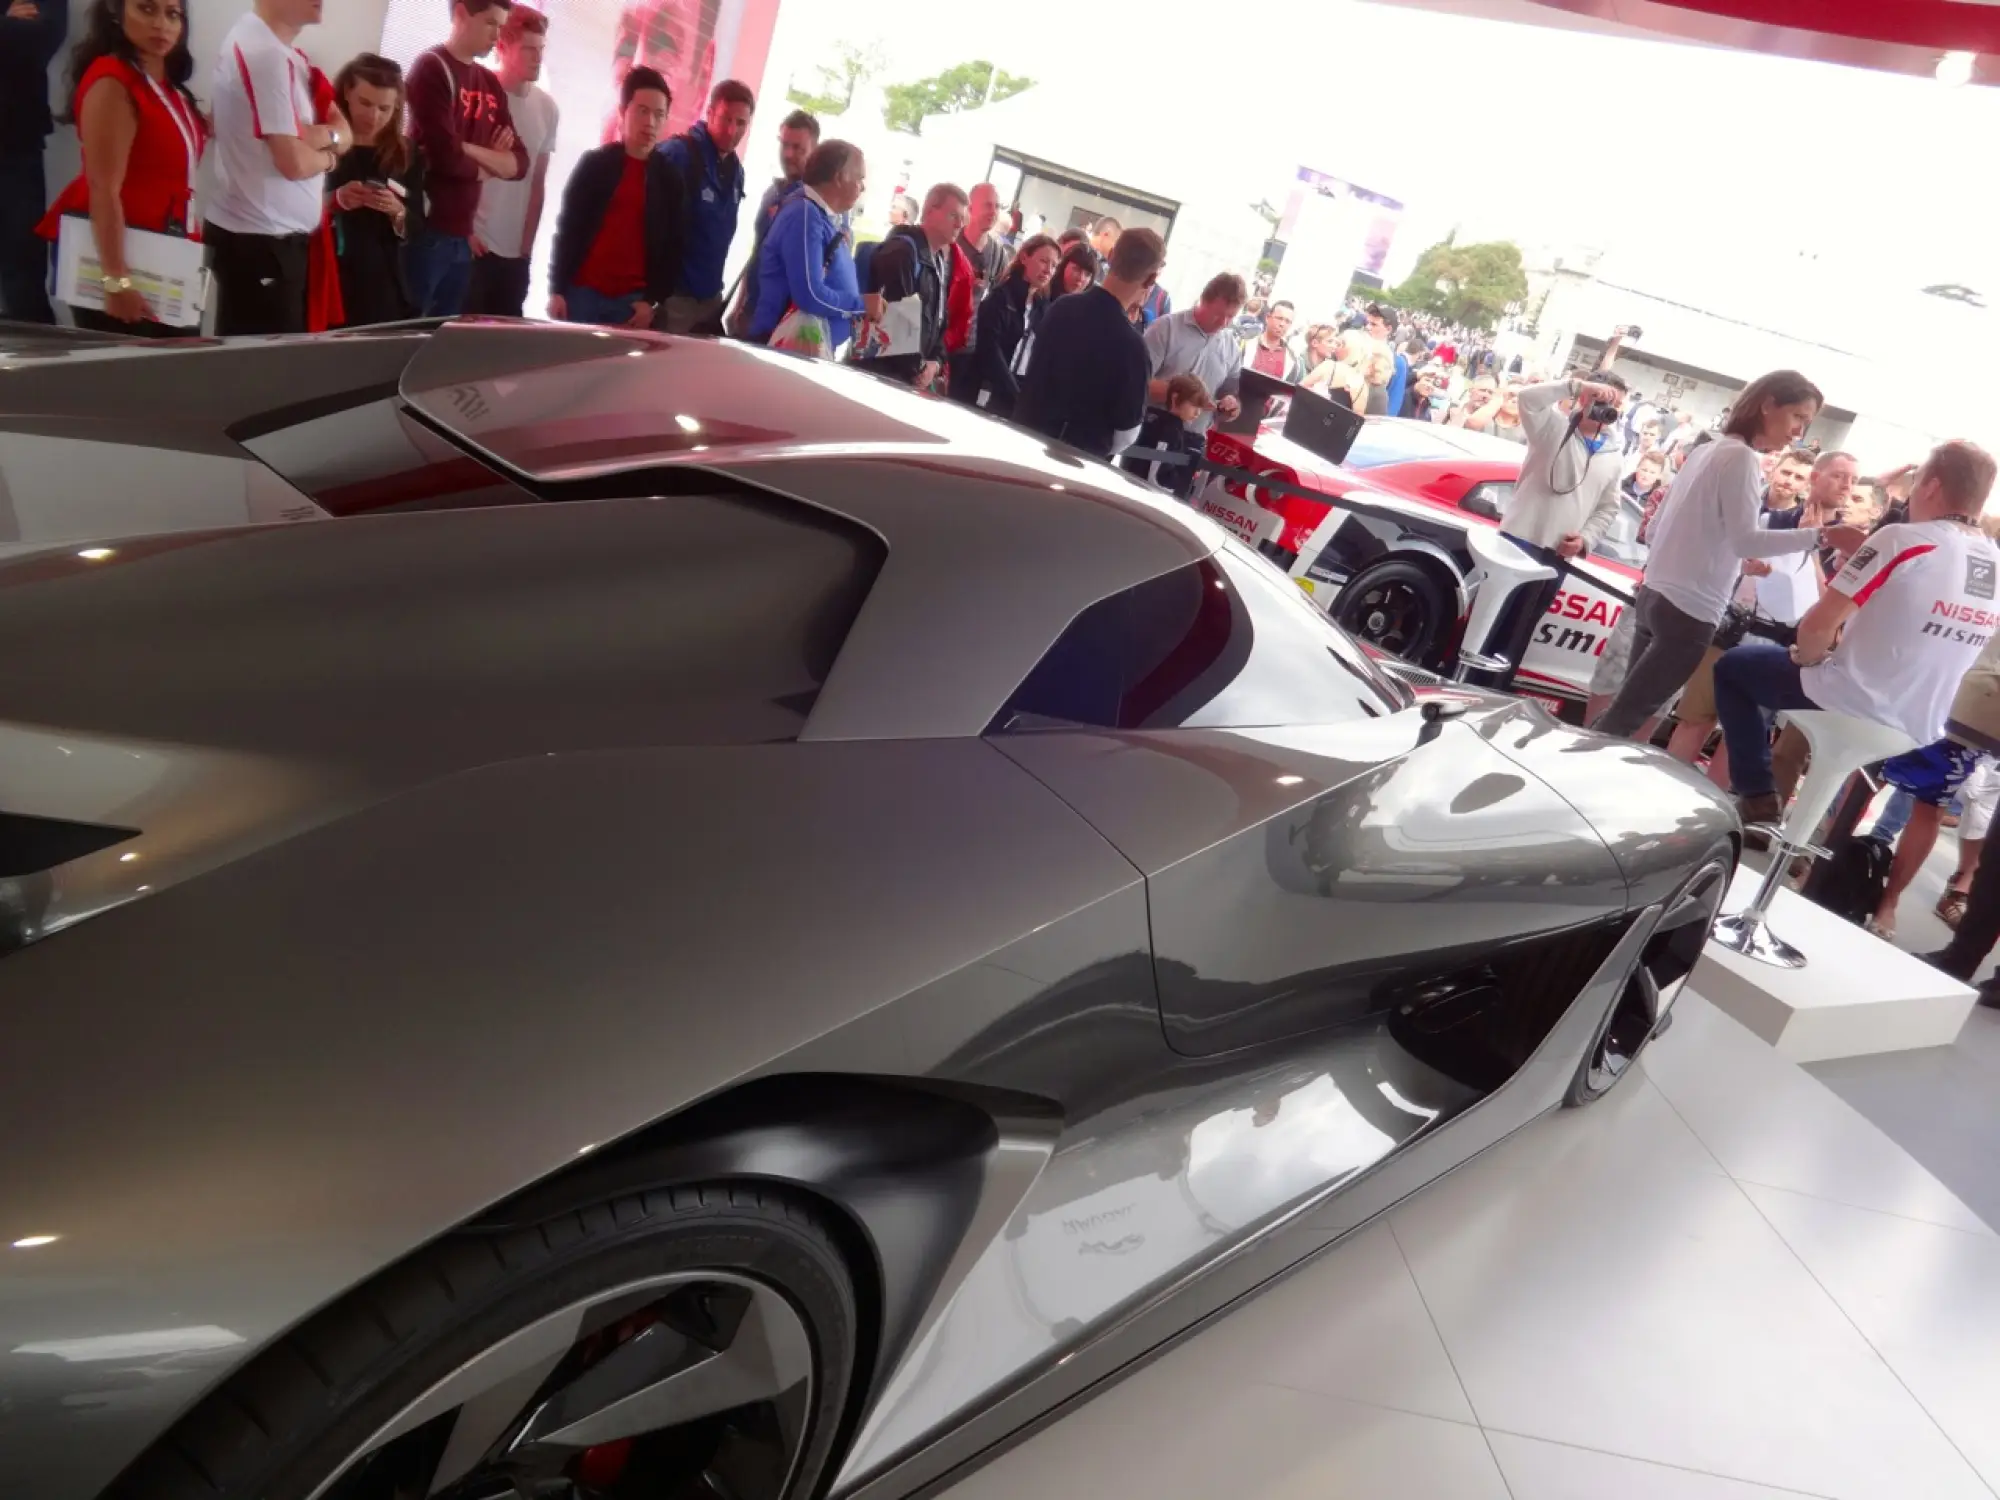 Nissan Concept 2020 Vision Gran Turismo - Goodwood 2014 - 14